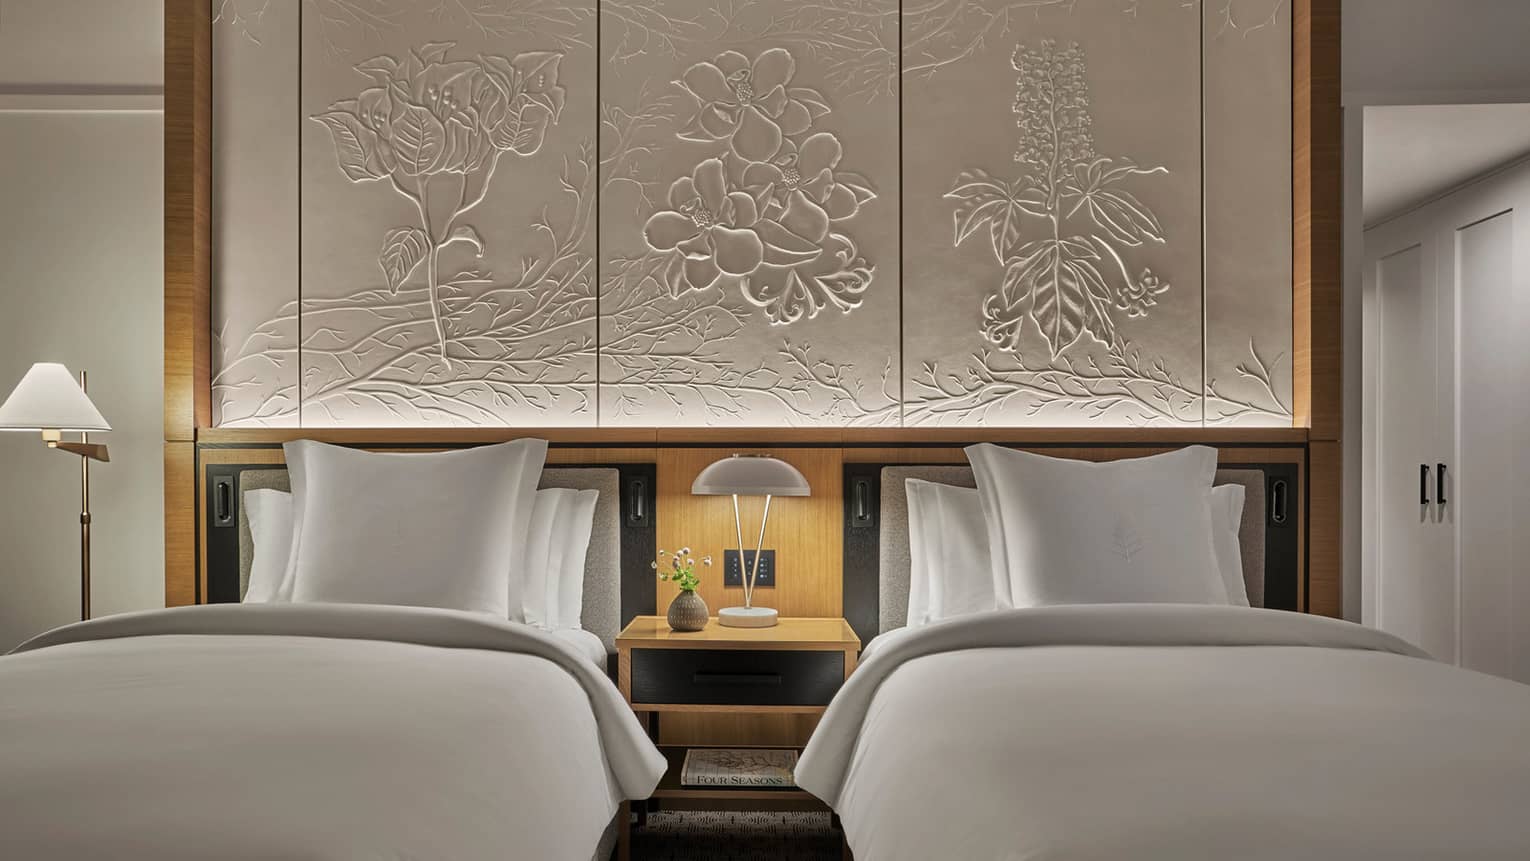 Single beds in luxurious suite below intricate wall art